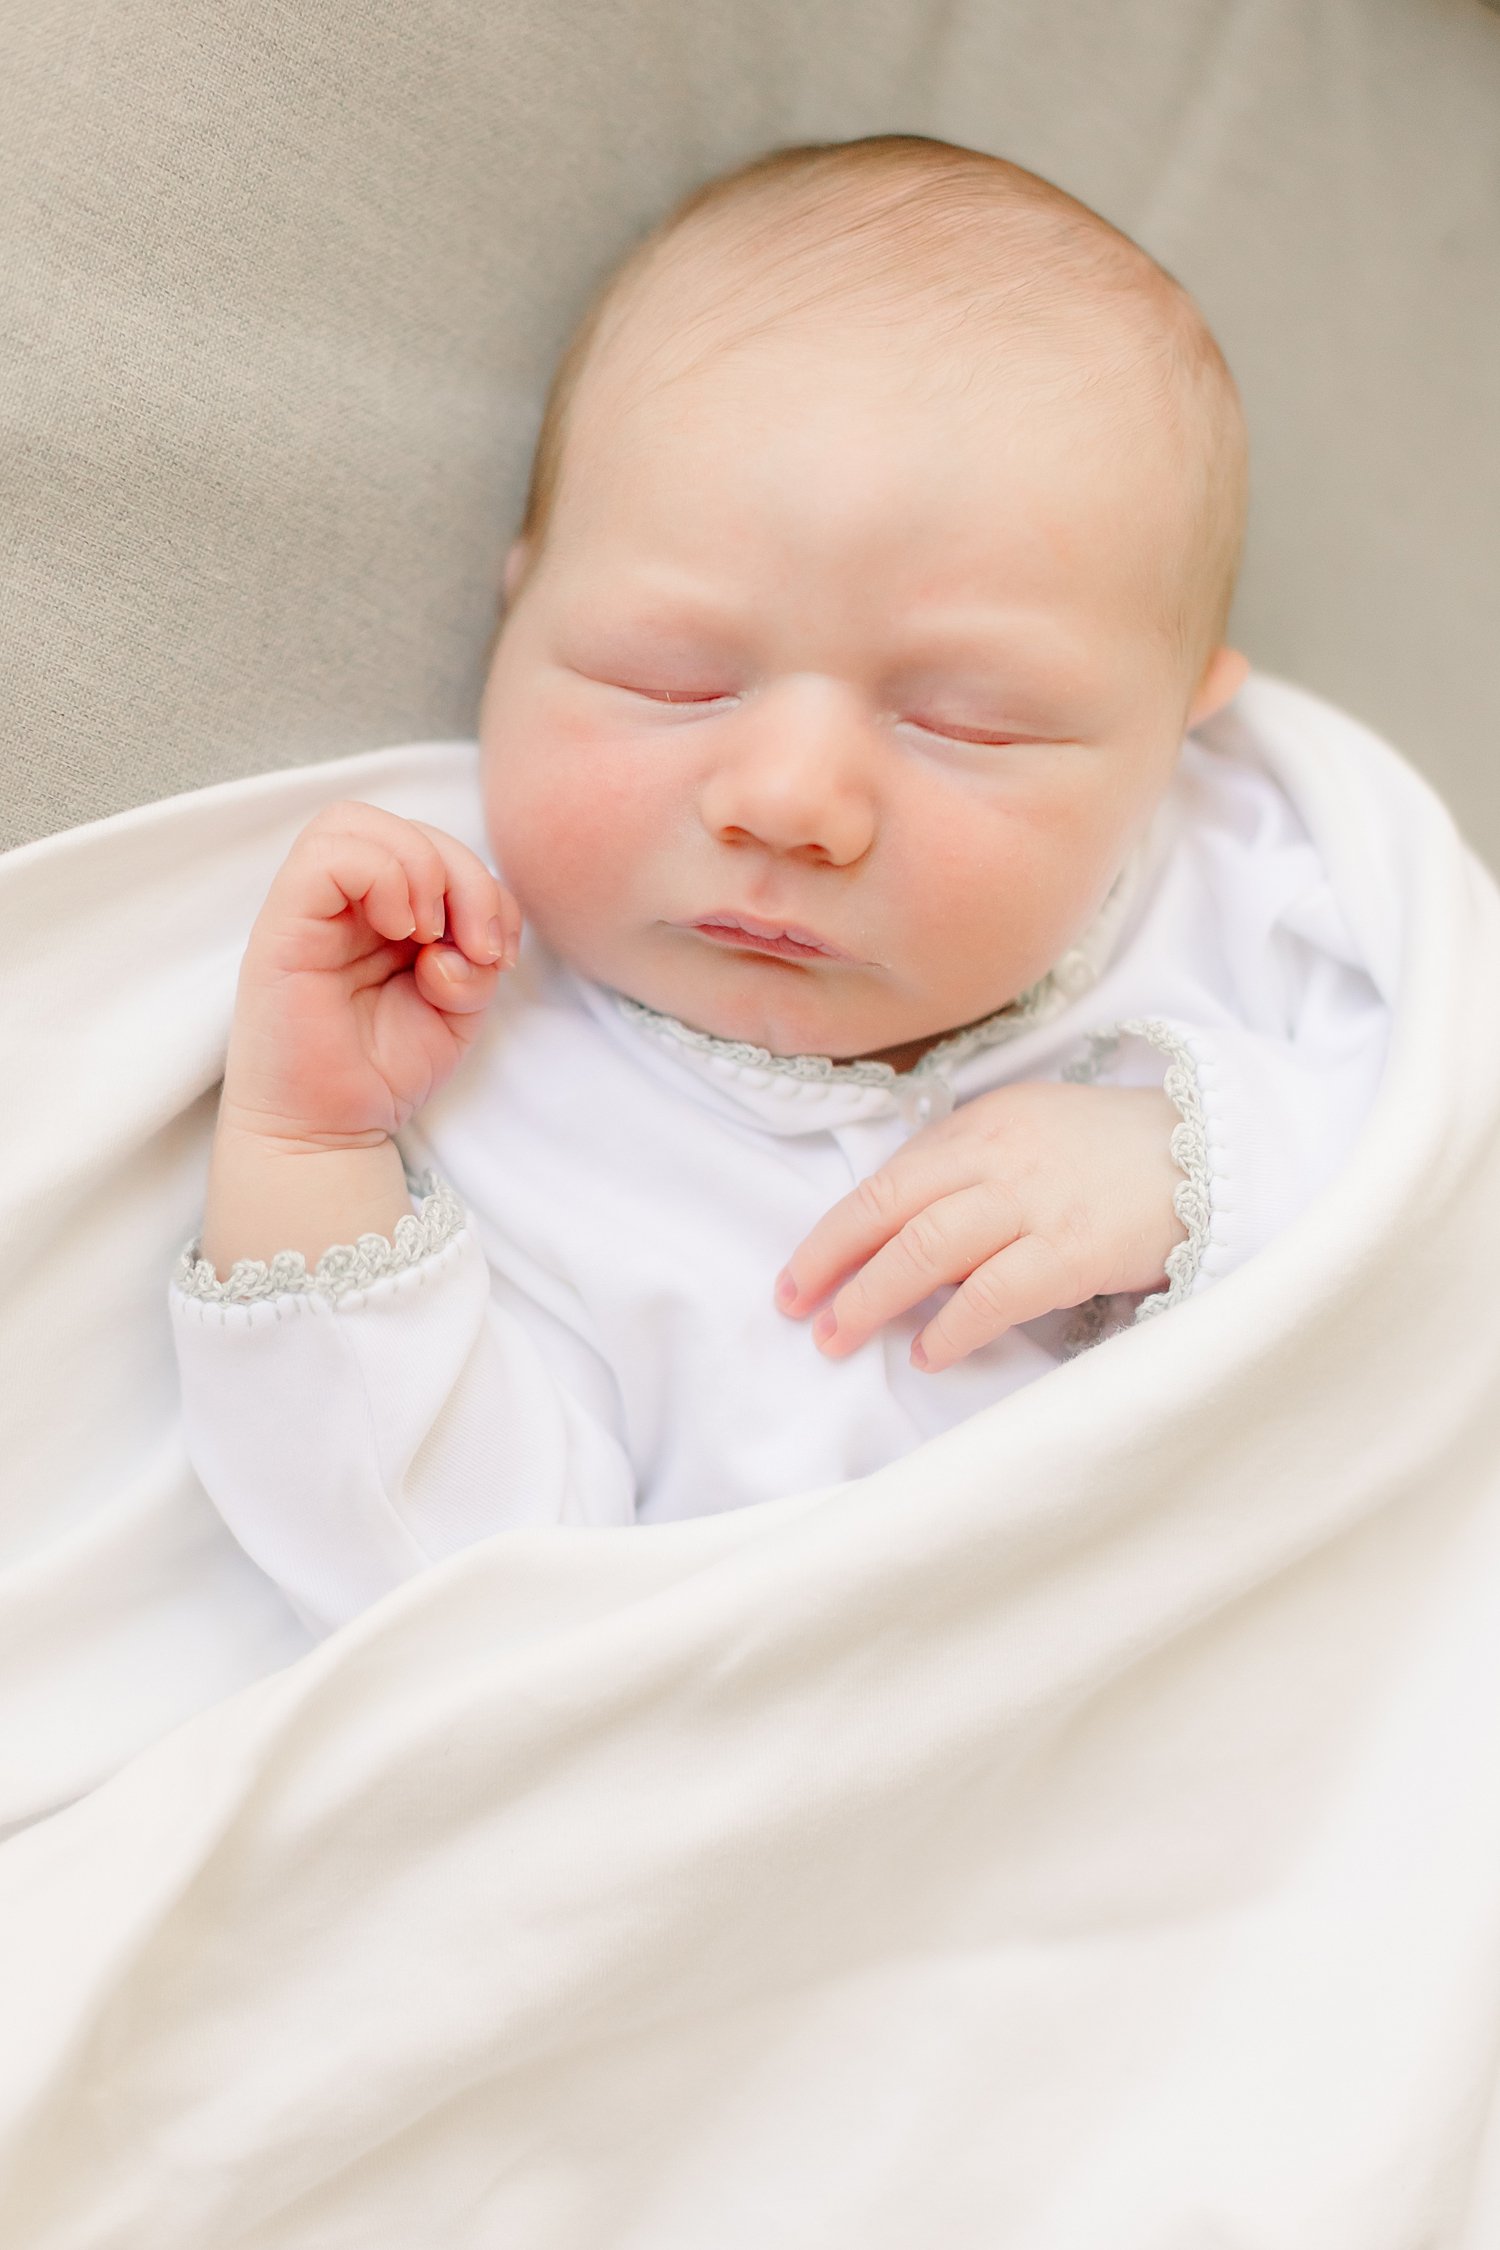 sarah-schmidt-photography-virginia-newborn-photographer-elegant-in-home-lifestyle-newborn-session-with-golden-retriever_0038.jpg